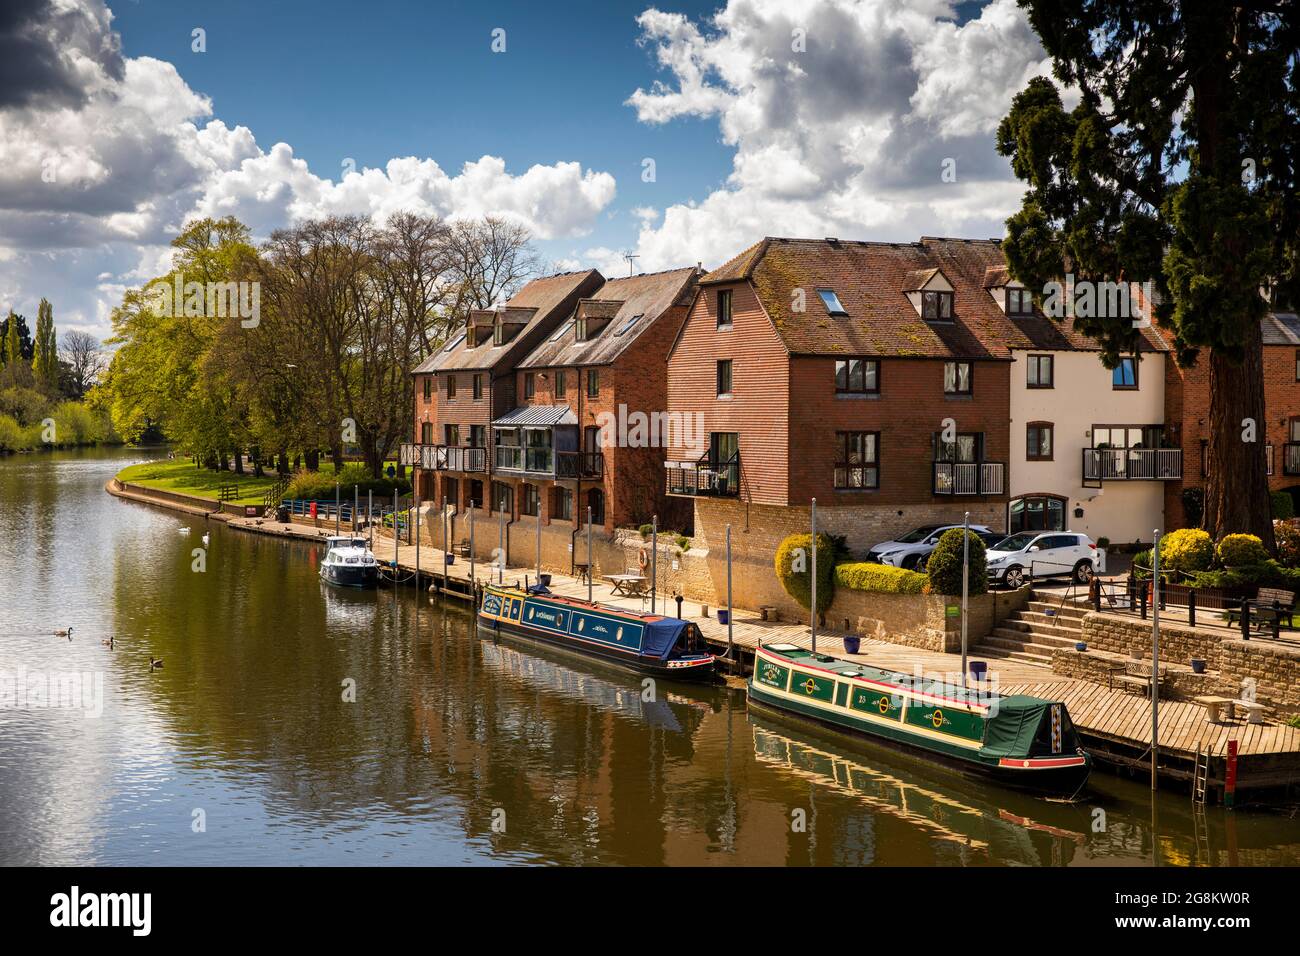 UK, England, Worcestershire, Evesham, River Avon, narrowboats moored at riverside properties Stock Photo